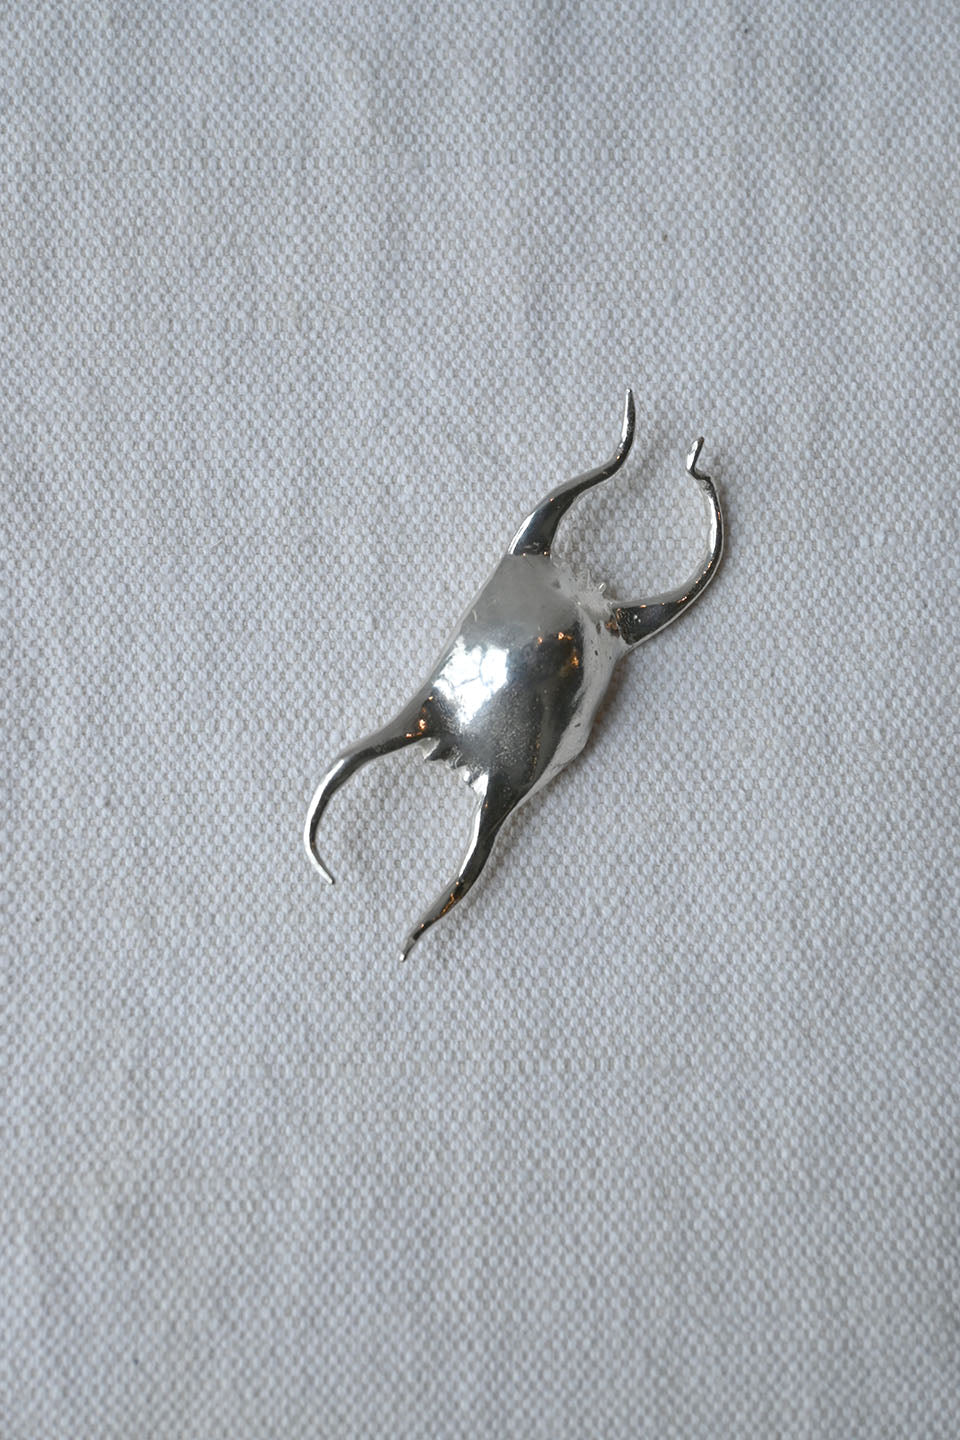 Mermaid Purse Pin (Gold + Silver)